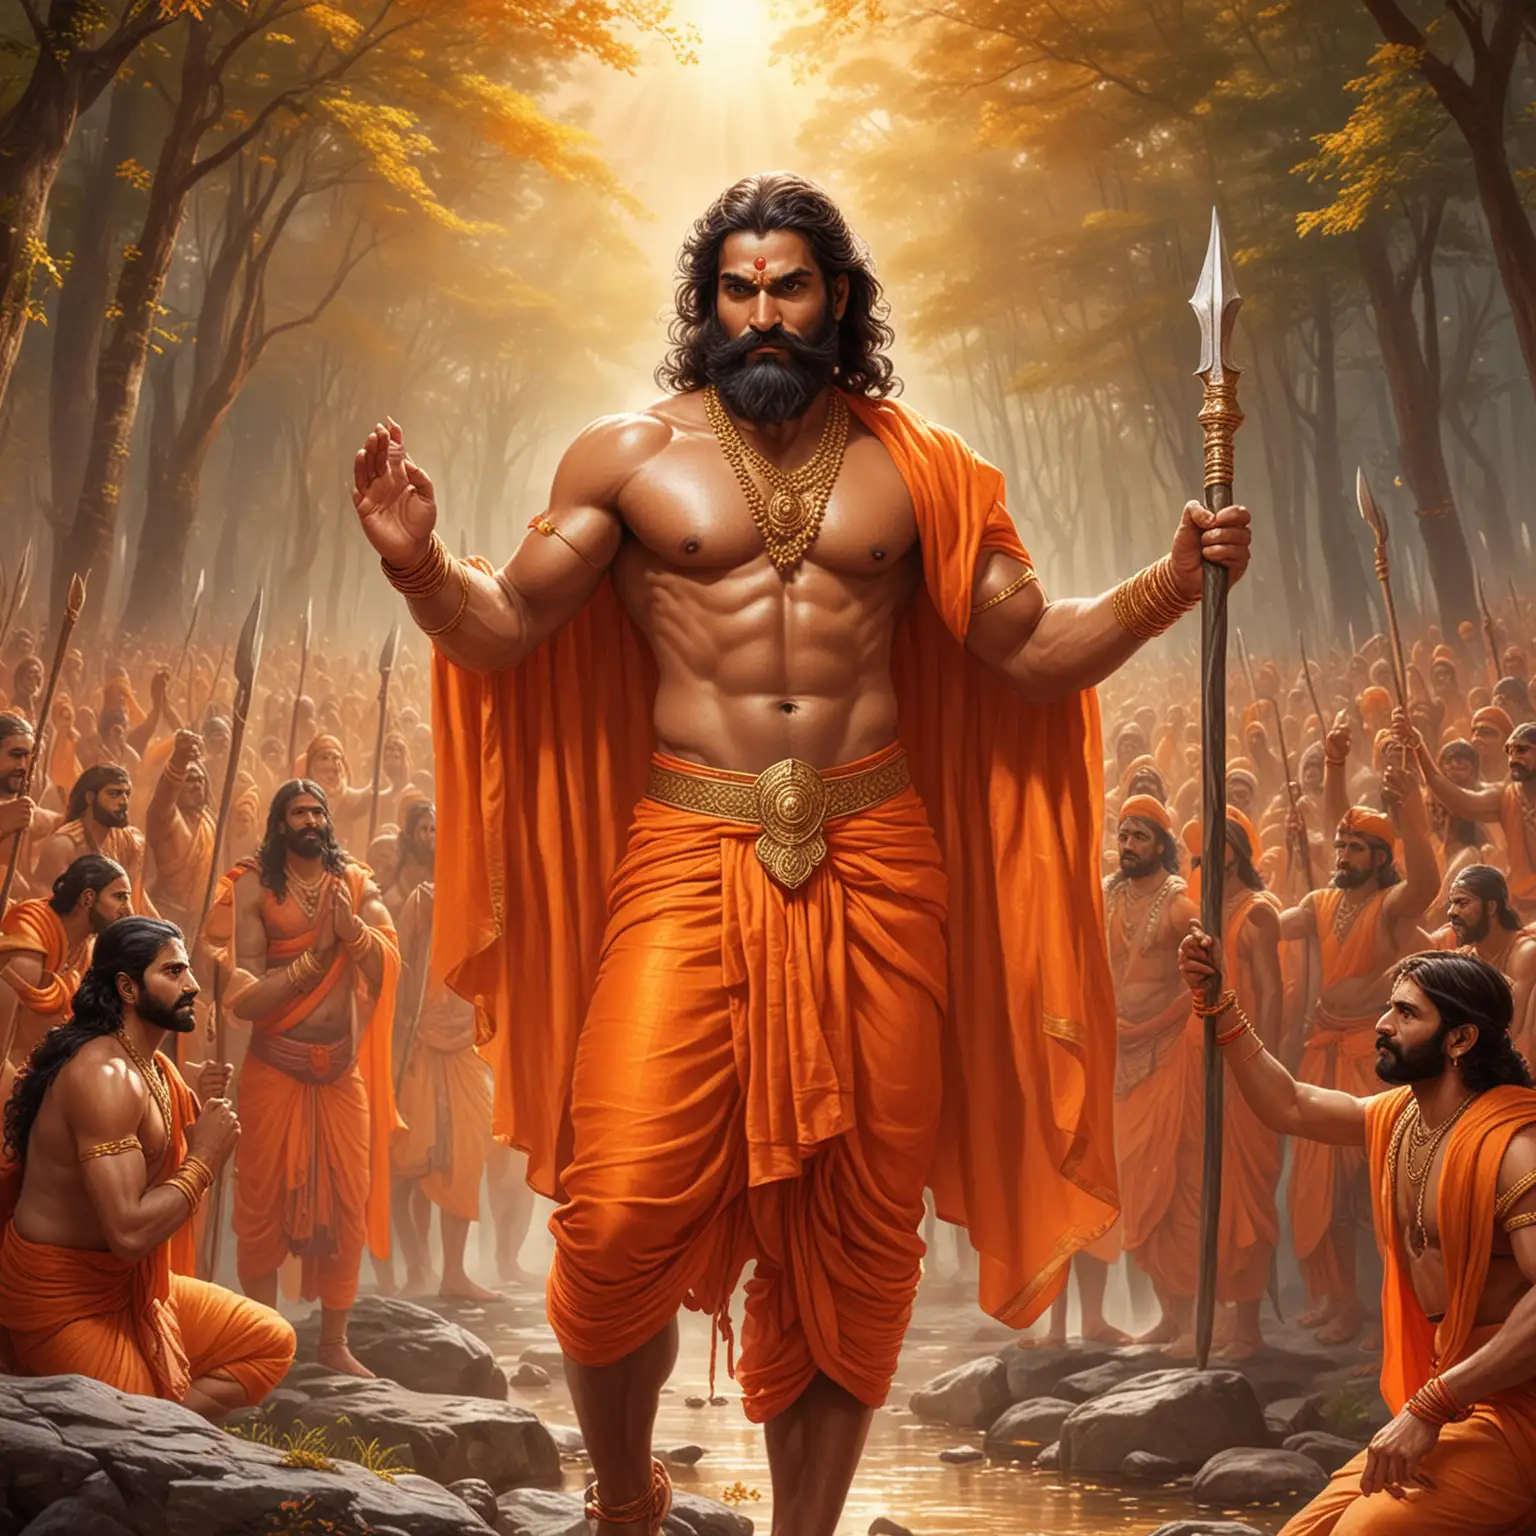 Parshuram Blessing in Orange Attire